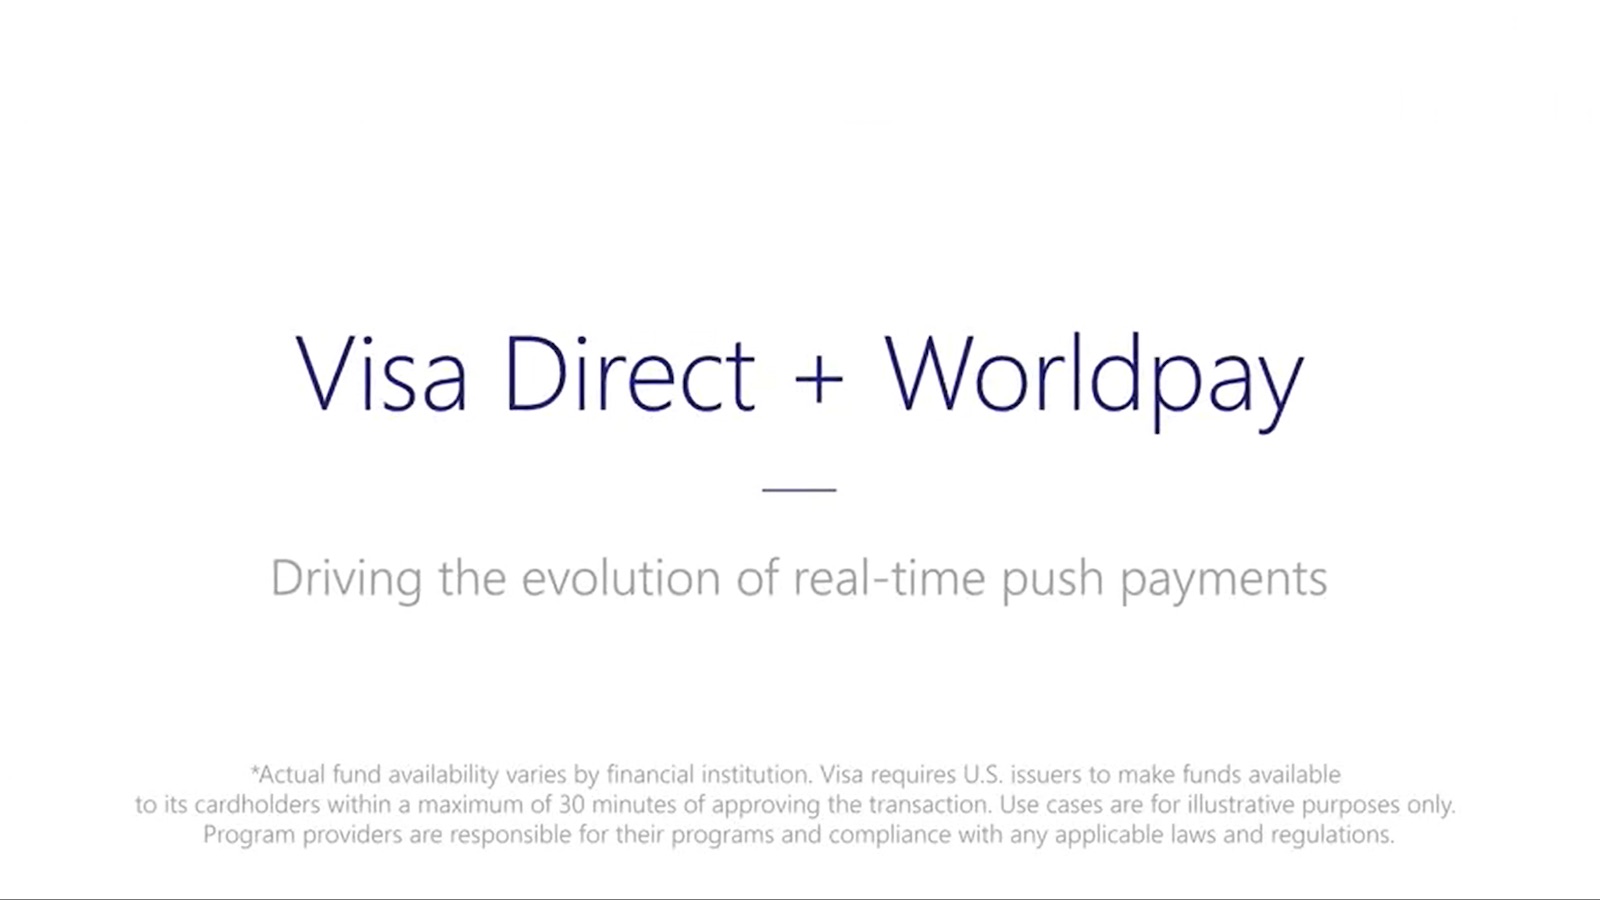 Visa Direct plus Worldpay video screenshot